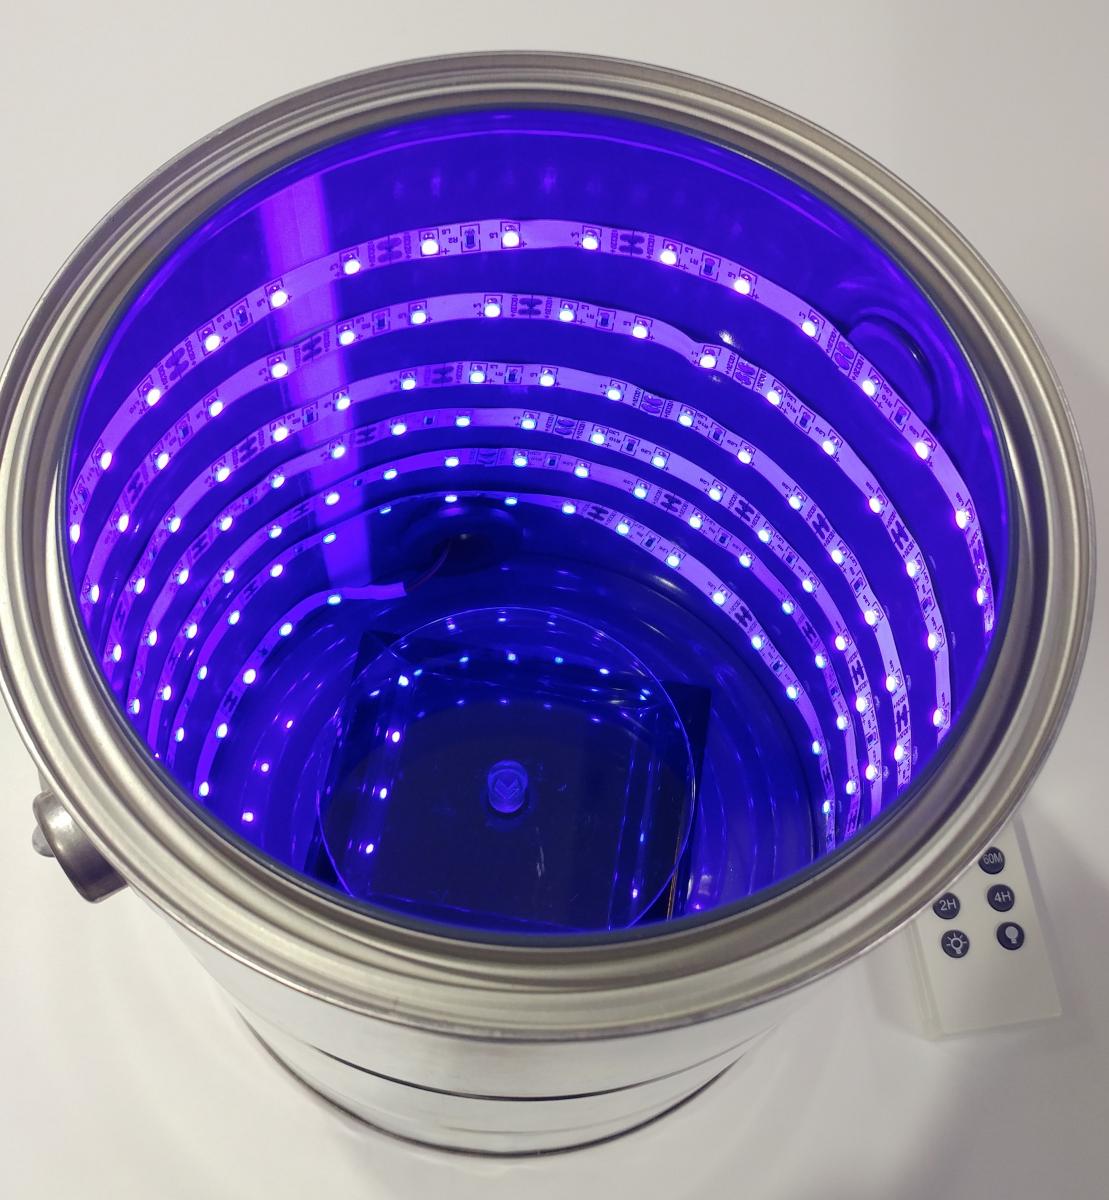 biblioteca bandera nacional Templado Do Space Making A UV Curing Chamber For Resin 3D Printed Parts - Do Space